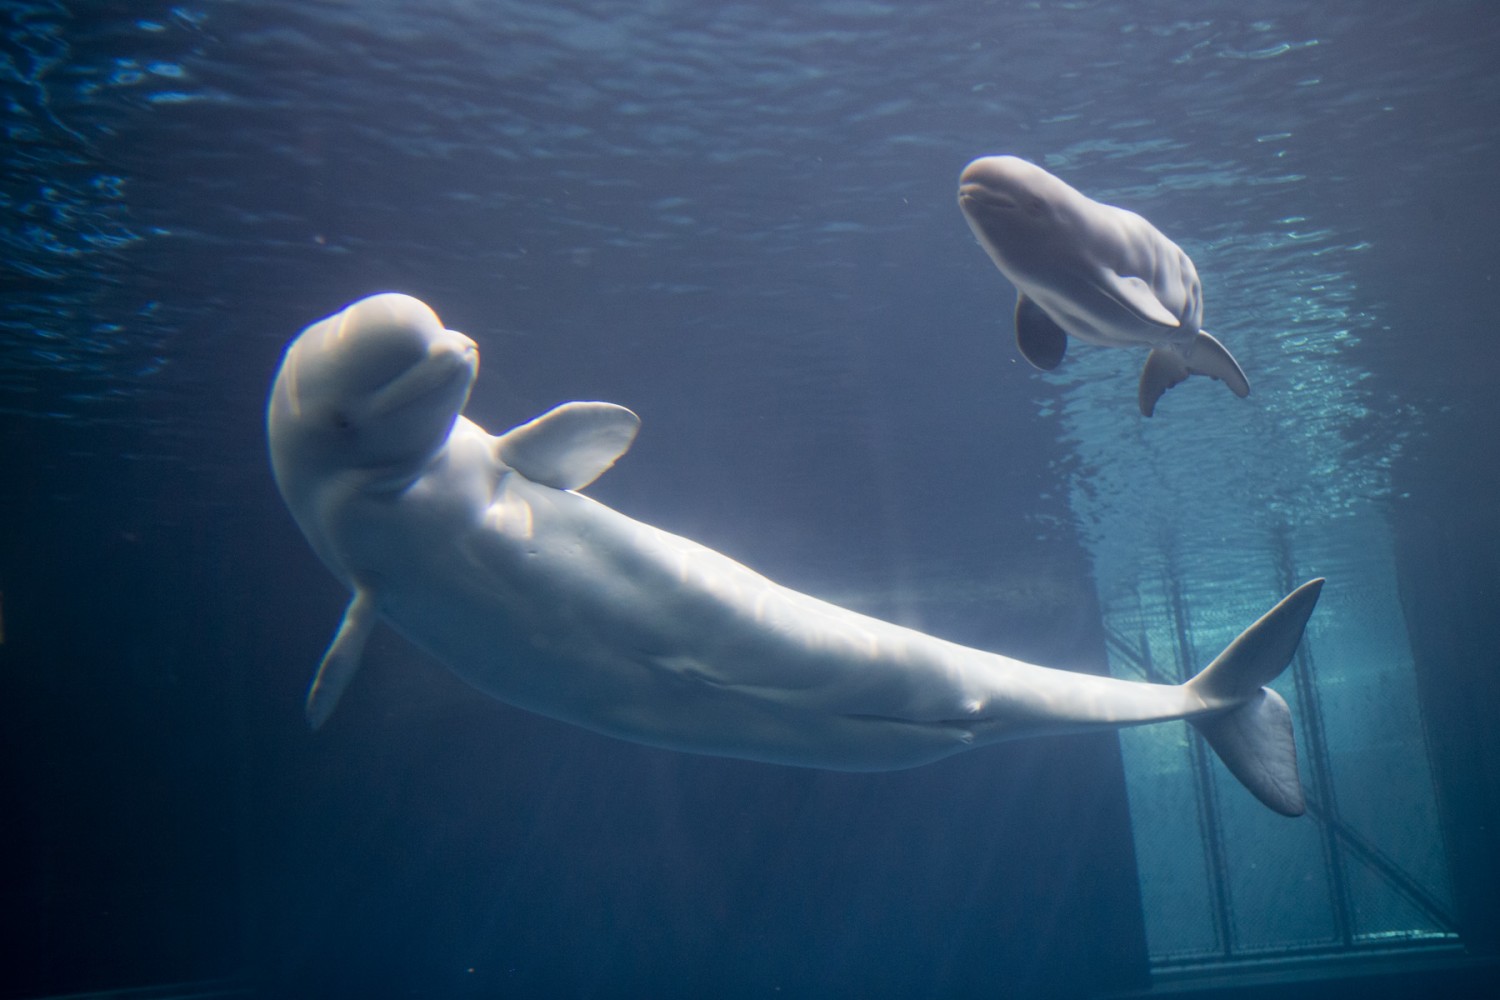 Baby Beluga': Whale That Inspired Popular Raffi Children's Song